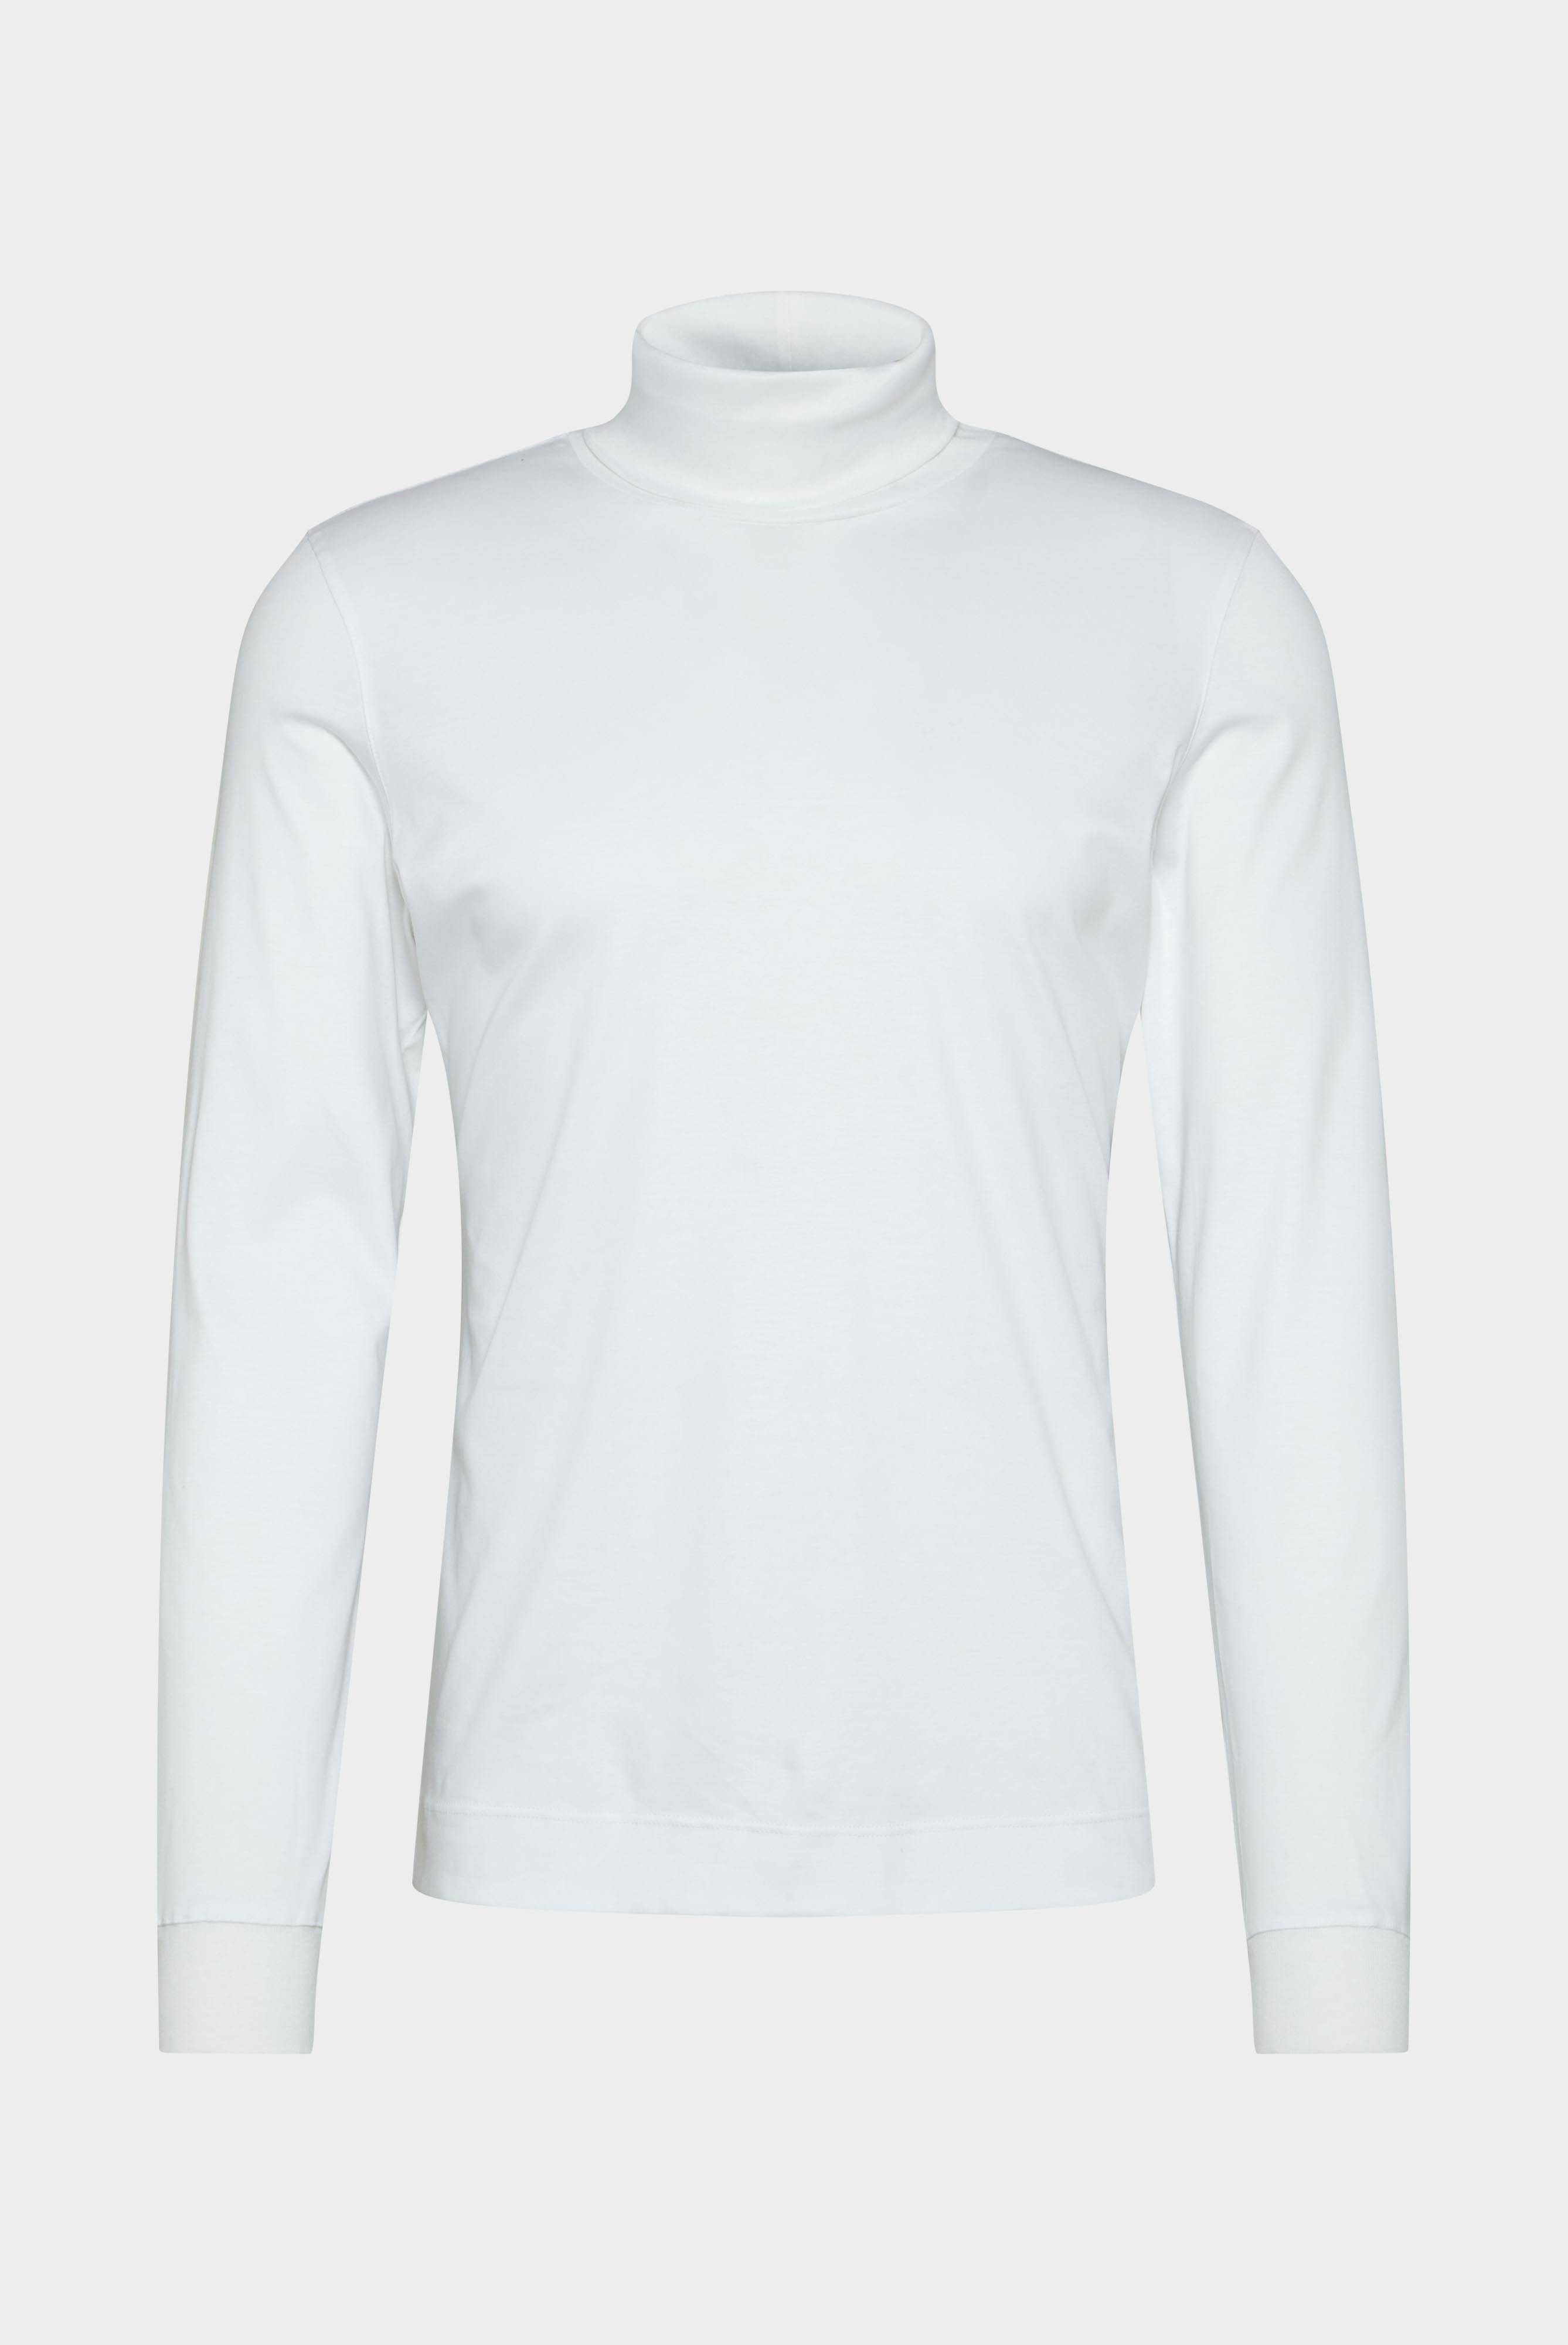 T-Shirts+Rollkragenshirt aus Jersey+20.1719.UX.180031.000.S